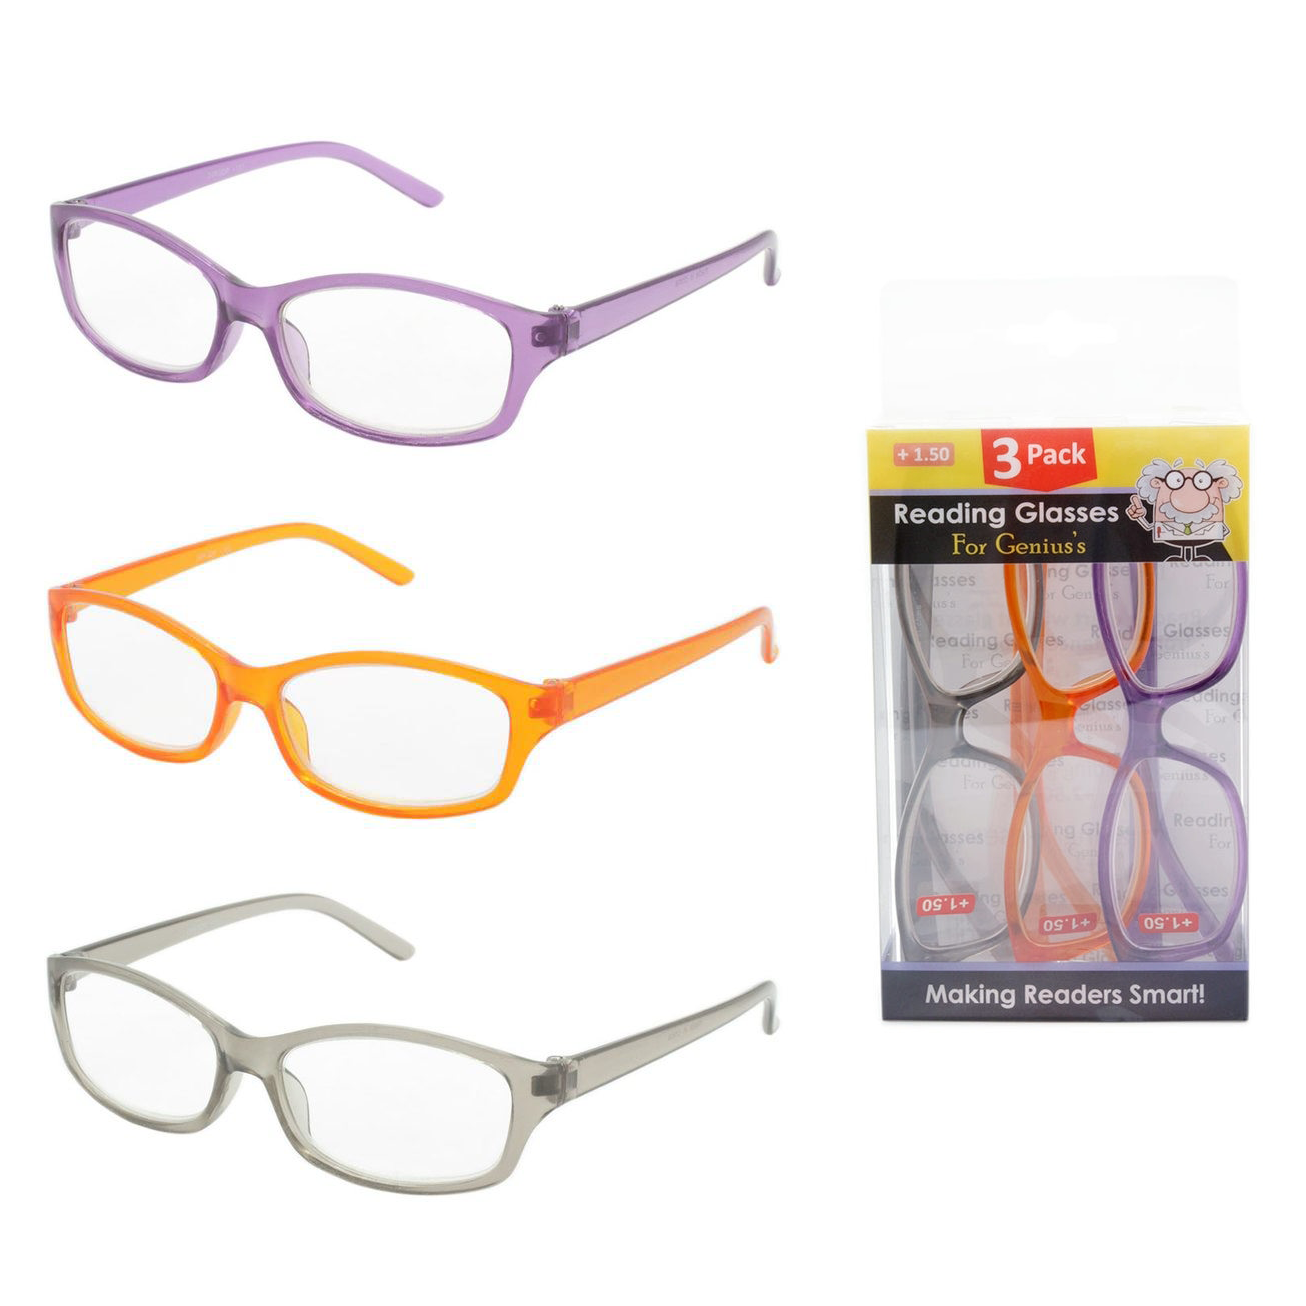 3pc Reading Glasses for Genius's (24 pc DISPLAY)